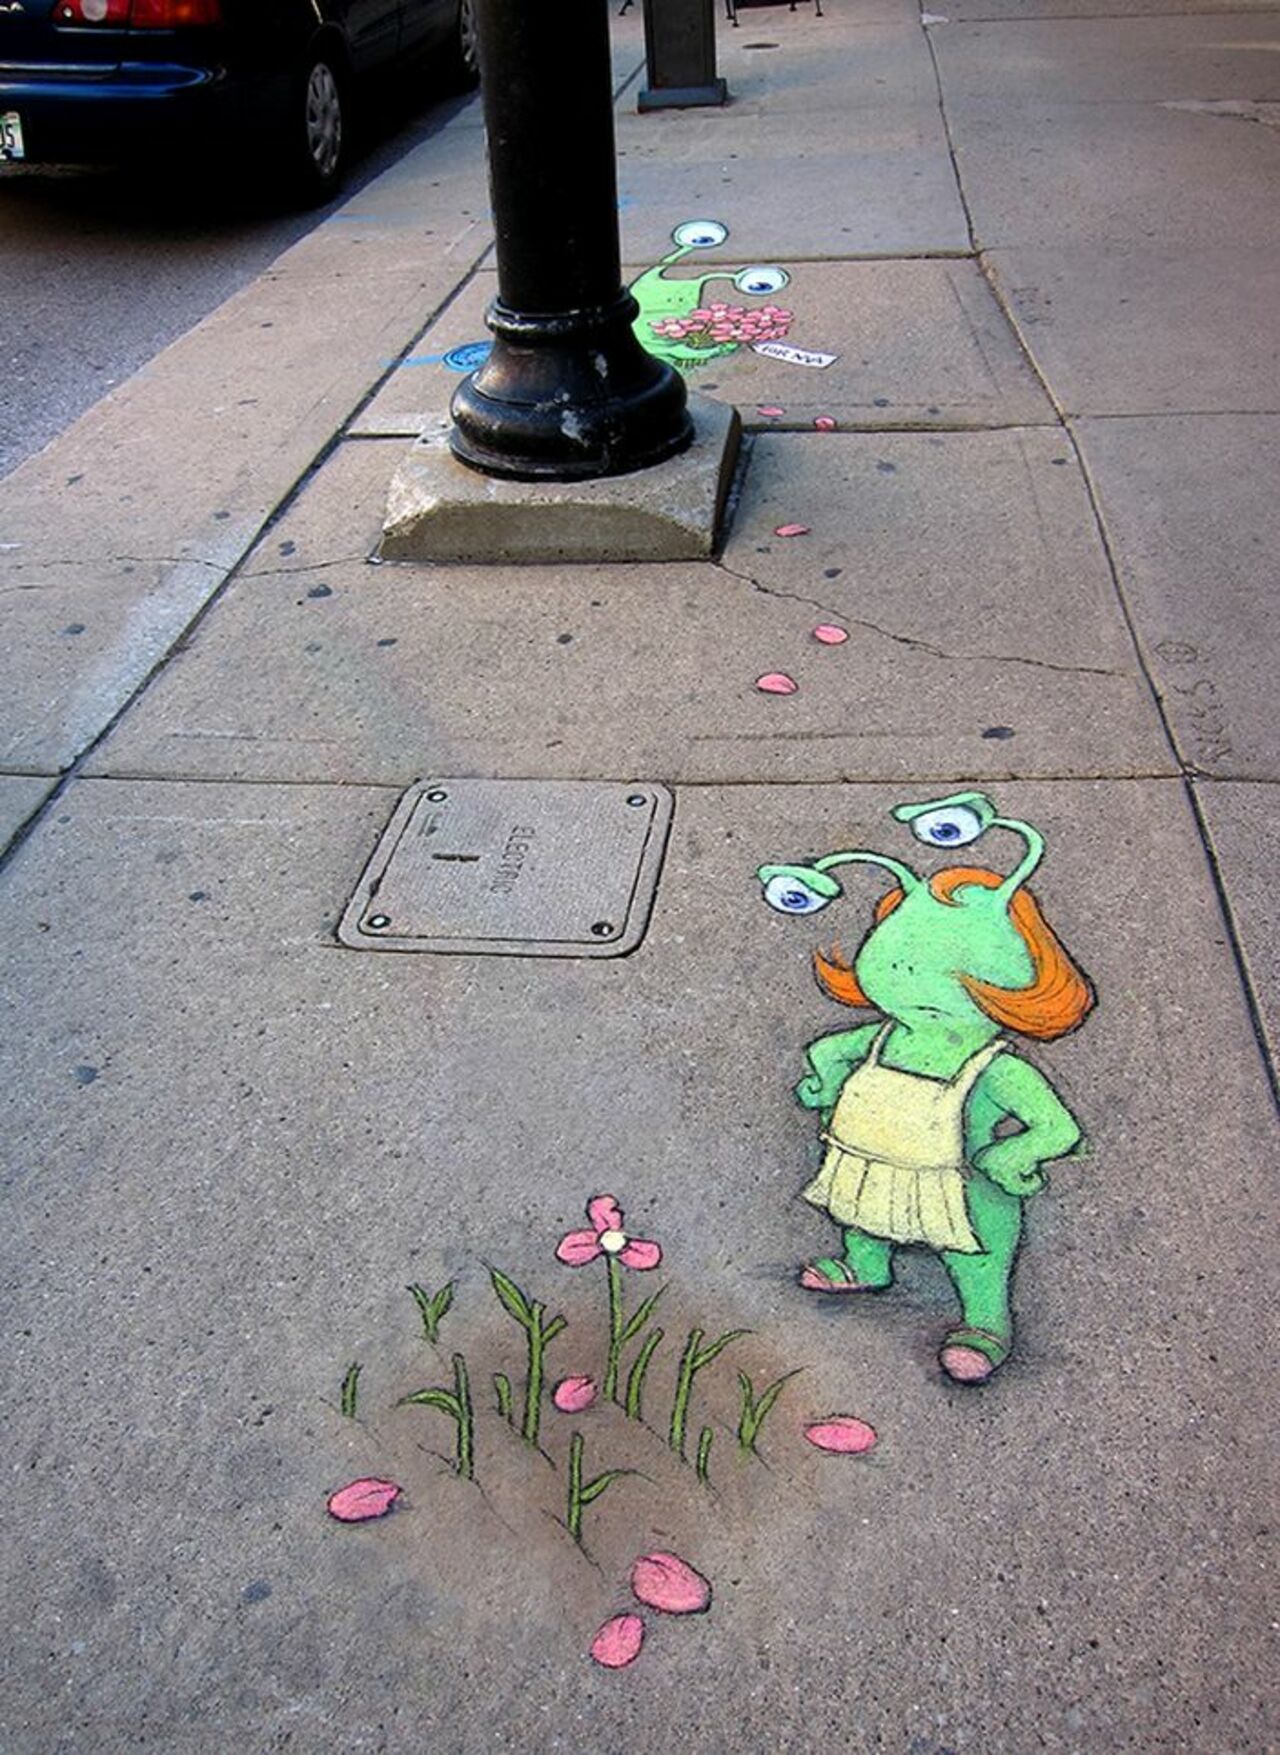 #DavidZinn does #Streetart with a streak of humor. What happened to her flowers? https://t.co/vrxvXS3B2C